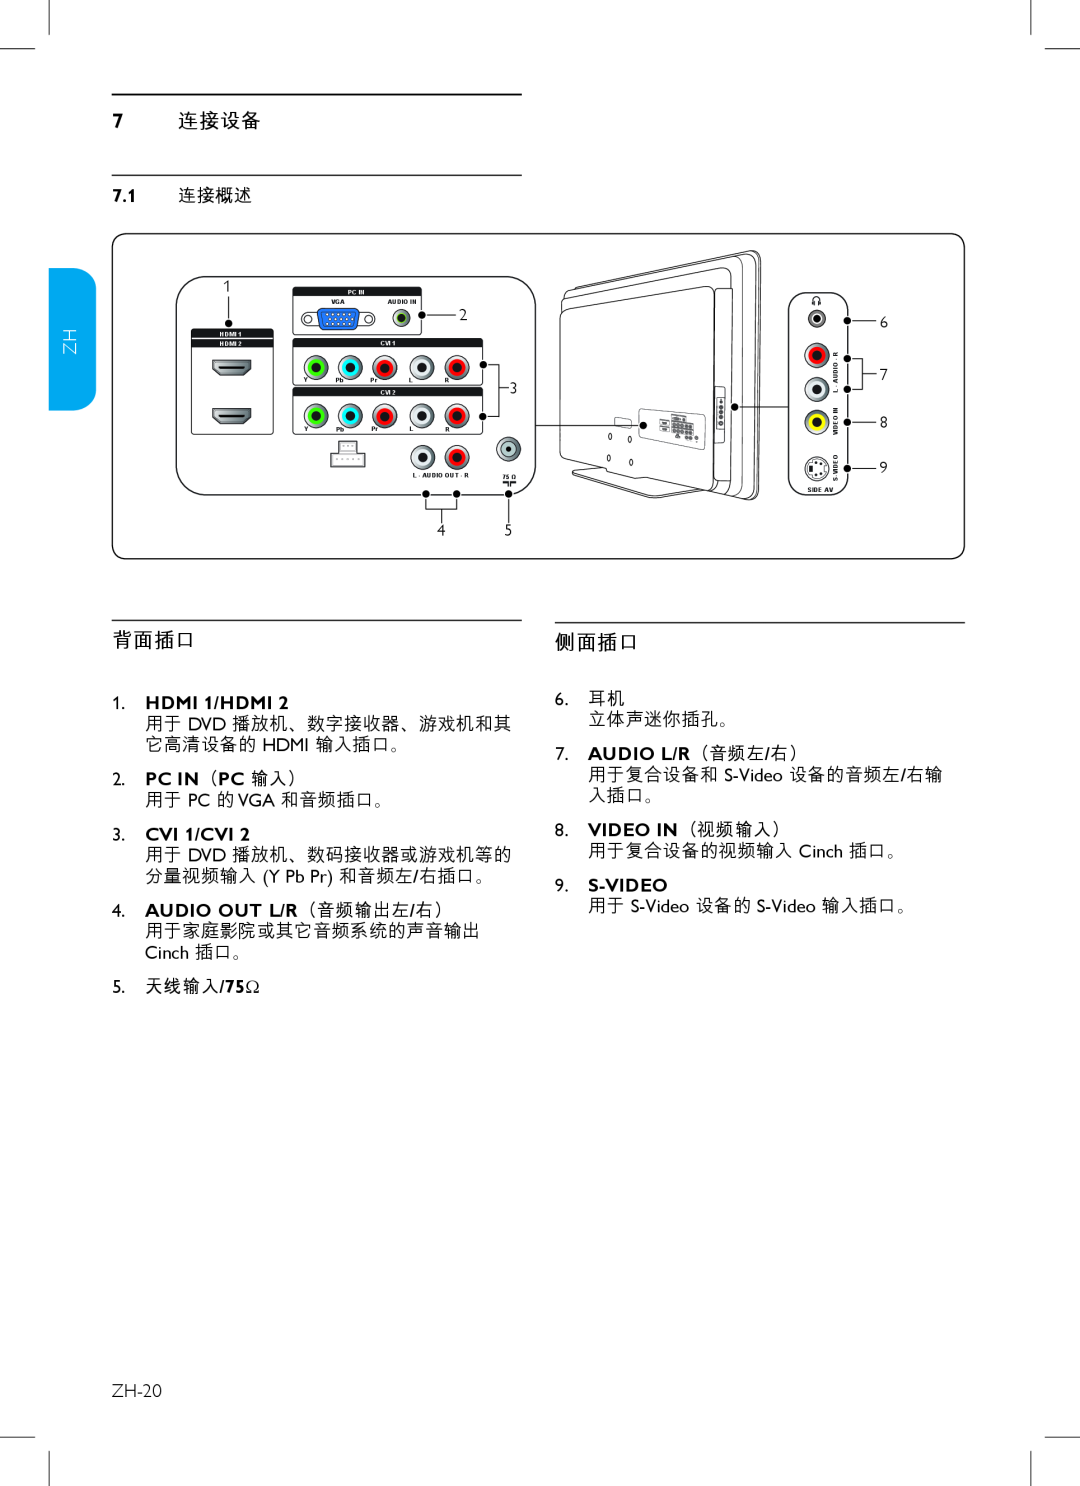 Philips 37HFL3330 7连接设备, Pc In（Pc 输入）, Audio L/R（音频左/右）, Video In（视频输入）, 背面插口, 侧面插口, HDMI 1/HDMI, CVI 1/CVI, S-Video, Hdmi 